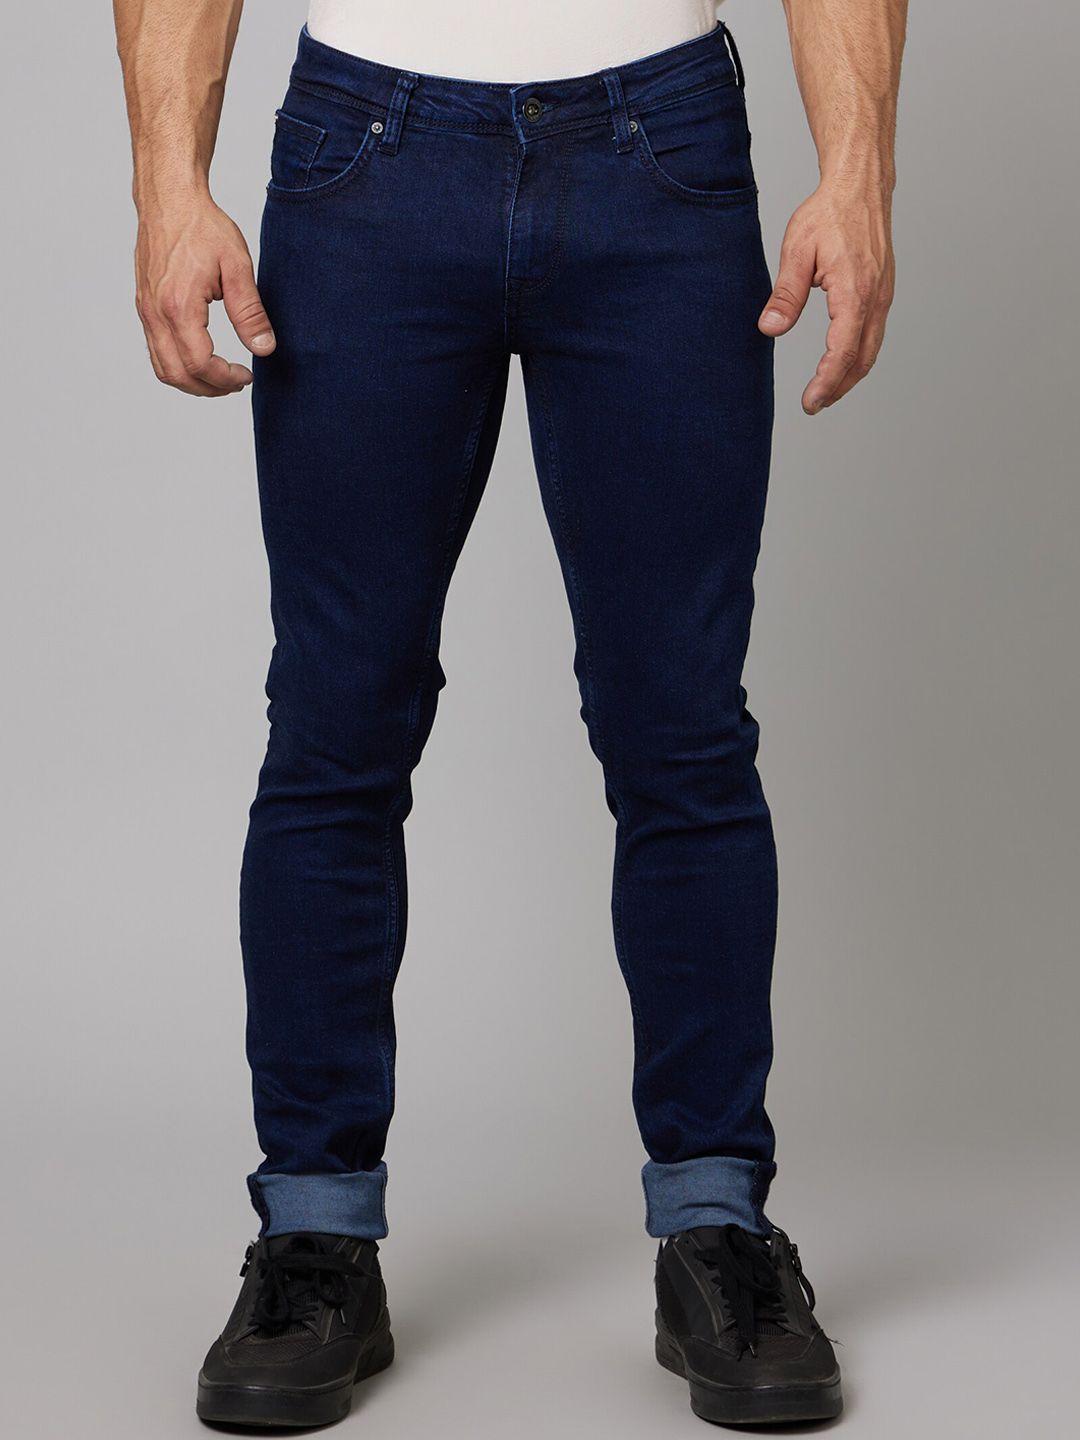 celio-men-mid-rise-jean-skinny-fit-jeans